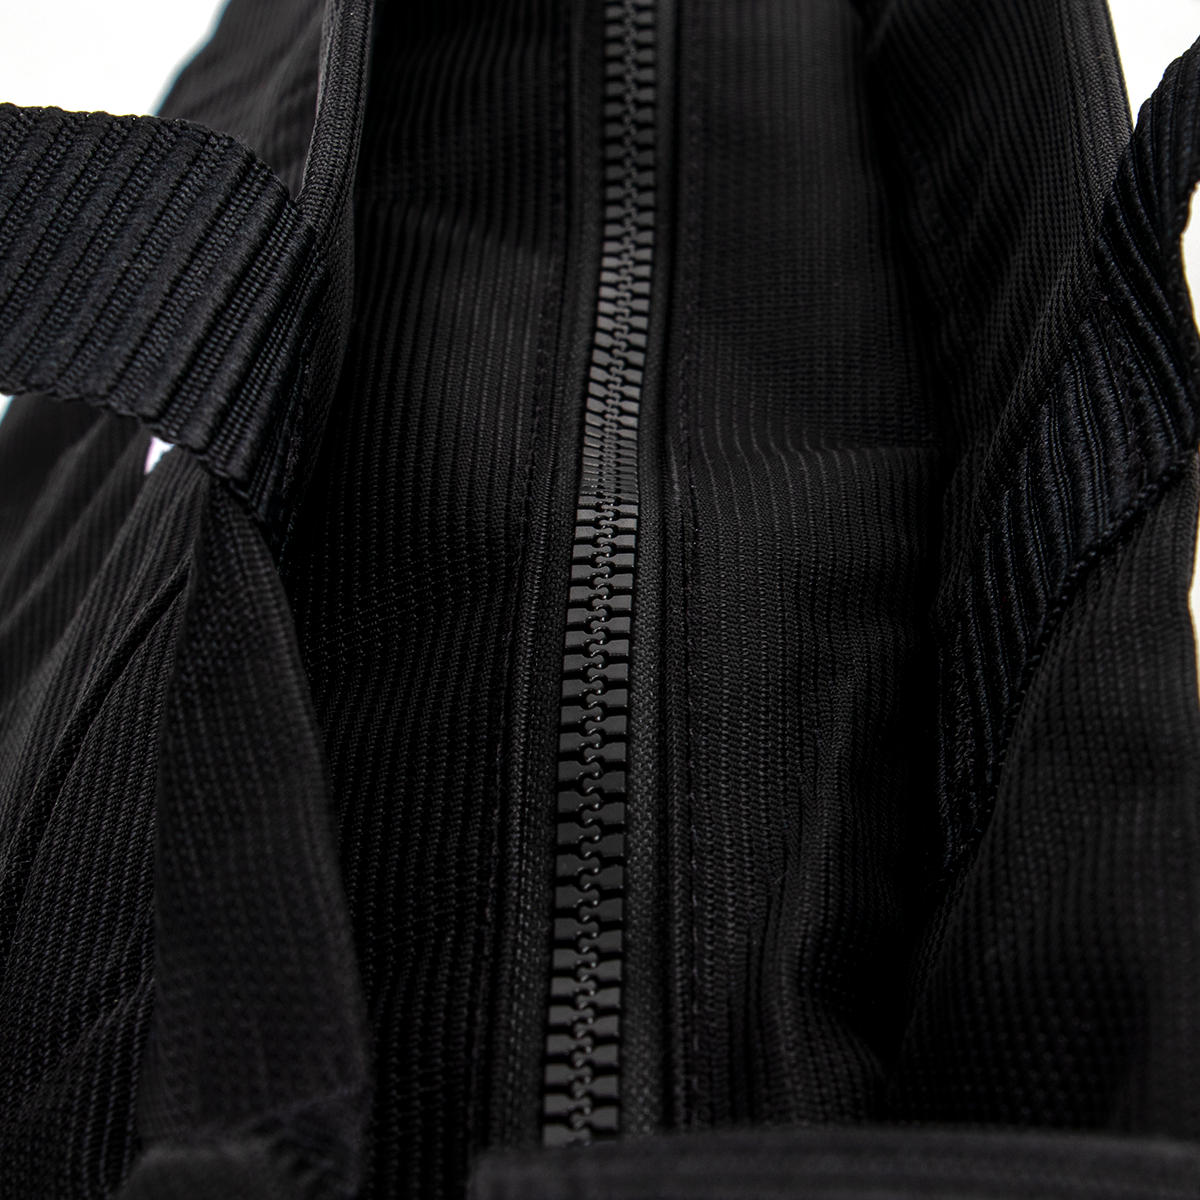 Nike Essentials Tote Bag Beige